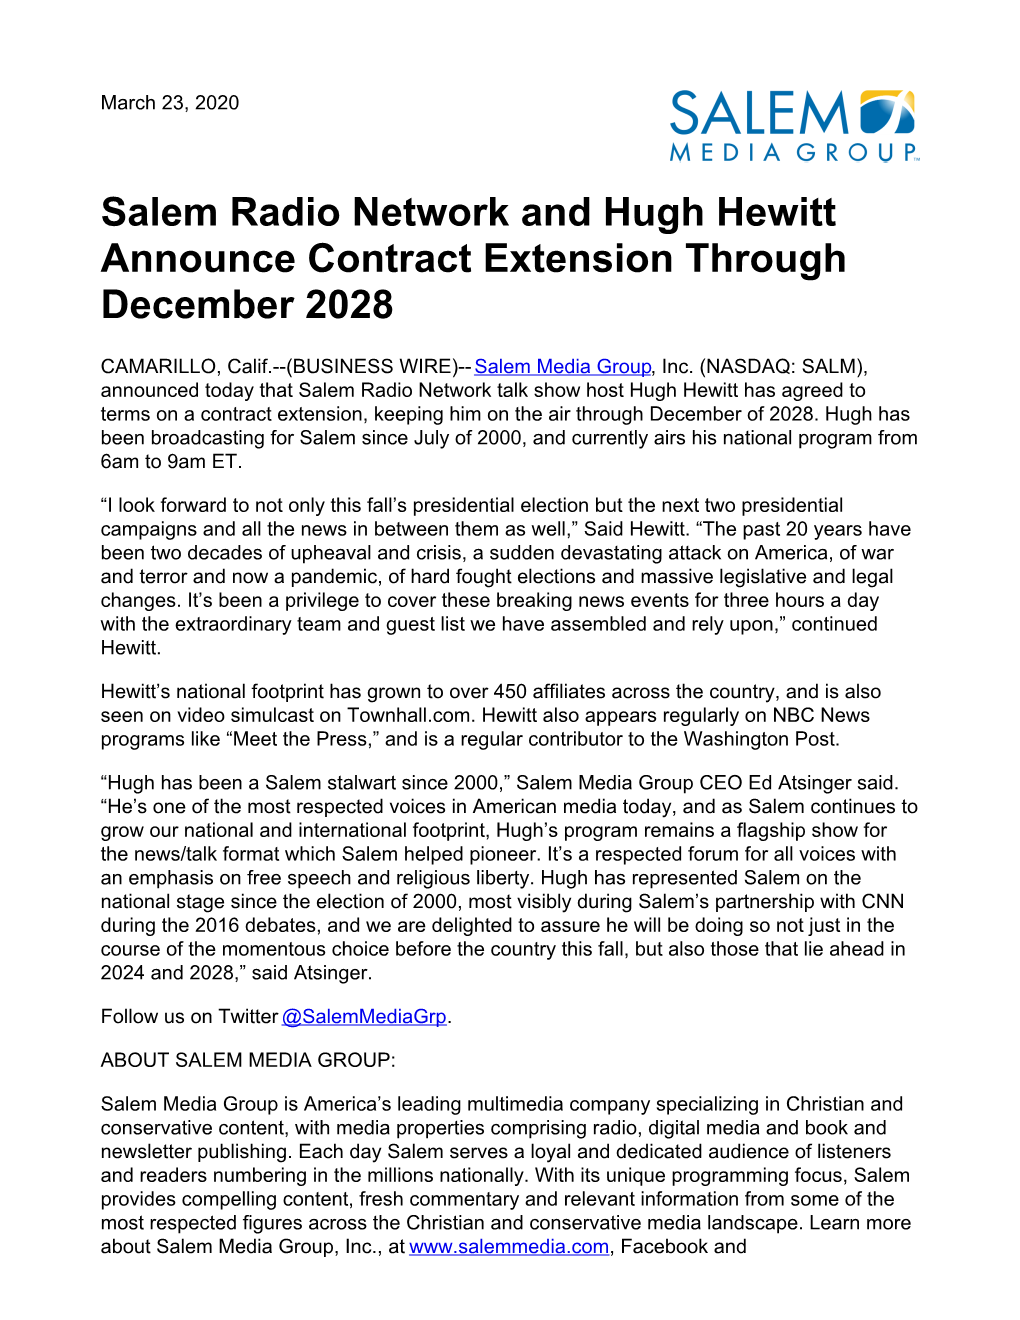 Salem Radio Network and Hugh Hewitt Announce Contract Extension Through December 2028